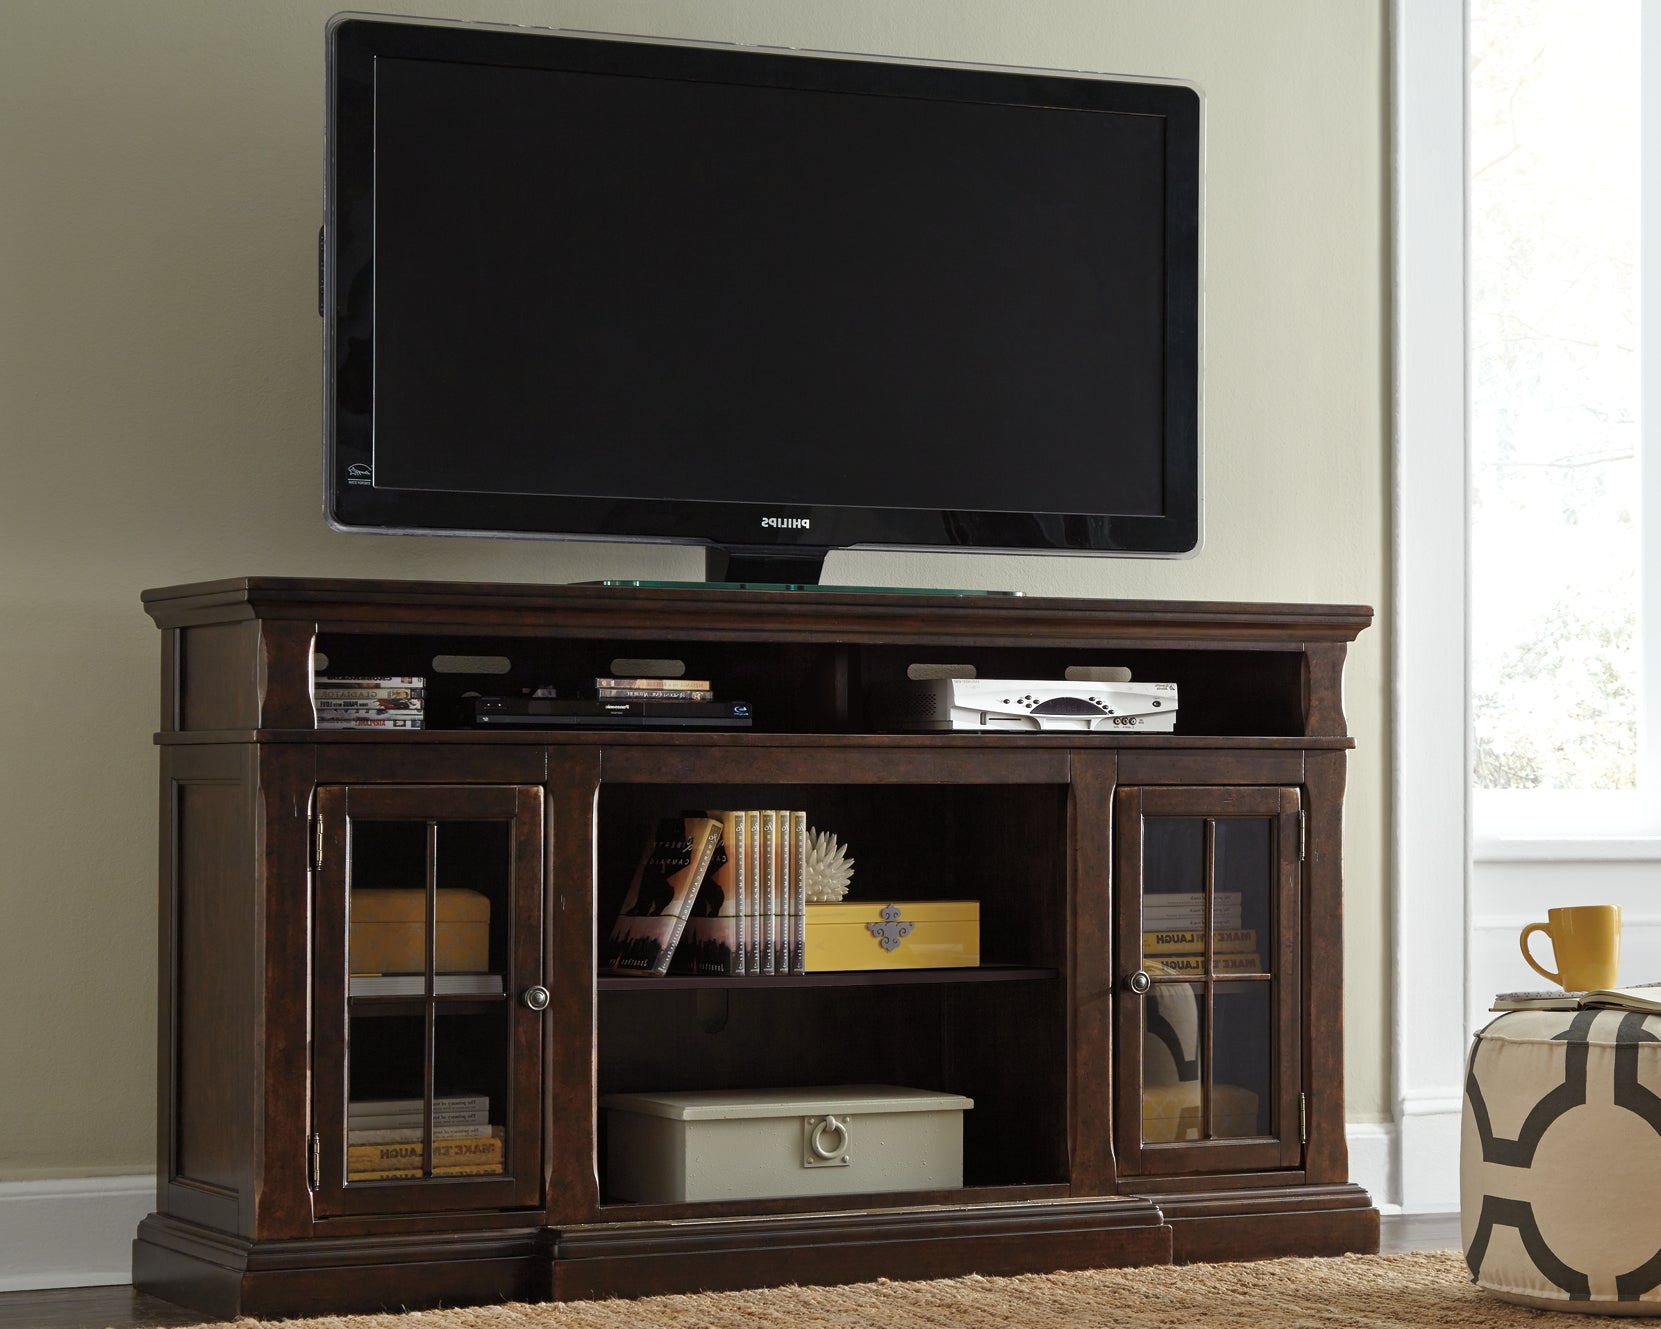 Roddinton XL TV Stand w/Fireplace Option at Cloud 9 Mattress & Furniture furniture, home furnishing, home decor